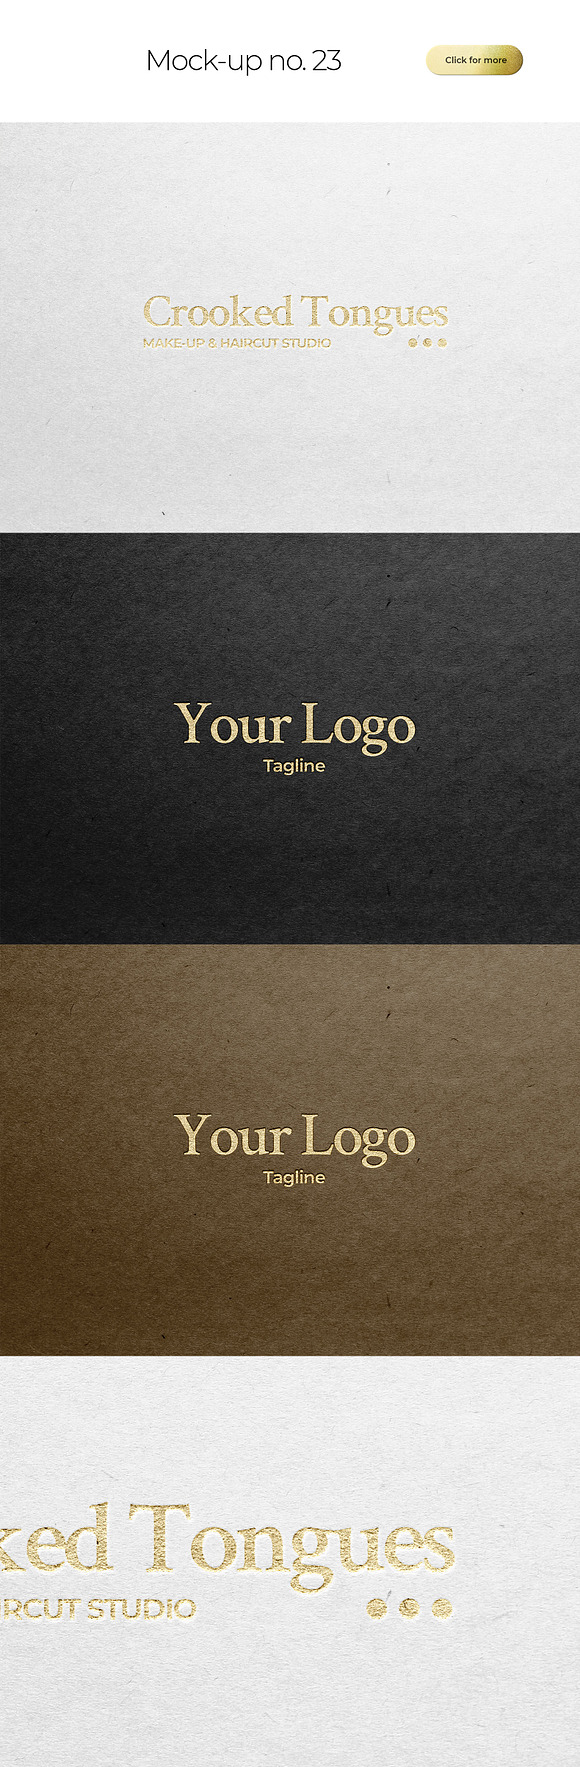 50 logo mockup branding bundle in Branding Mockups - product preview 24